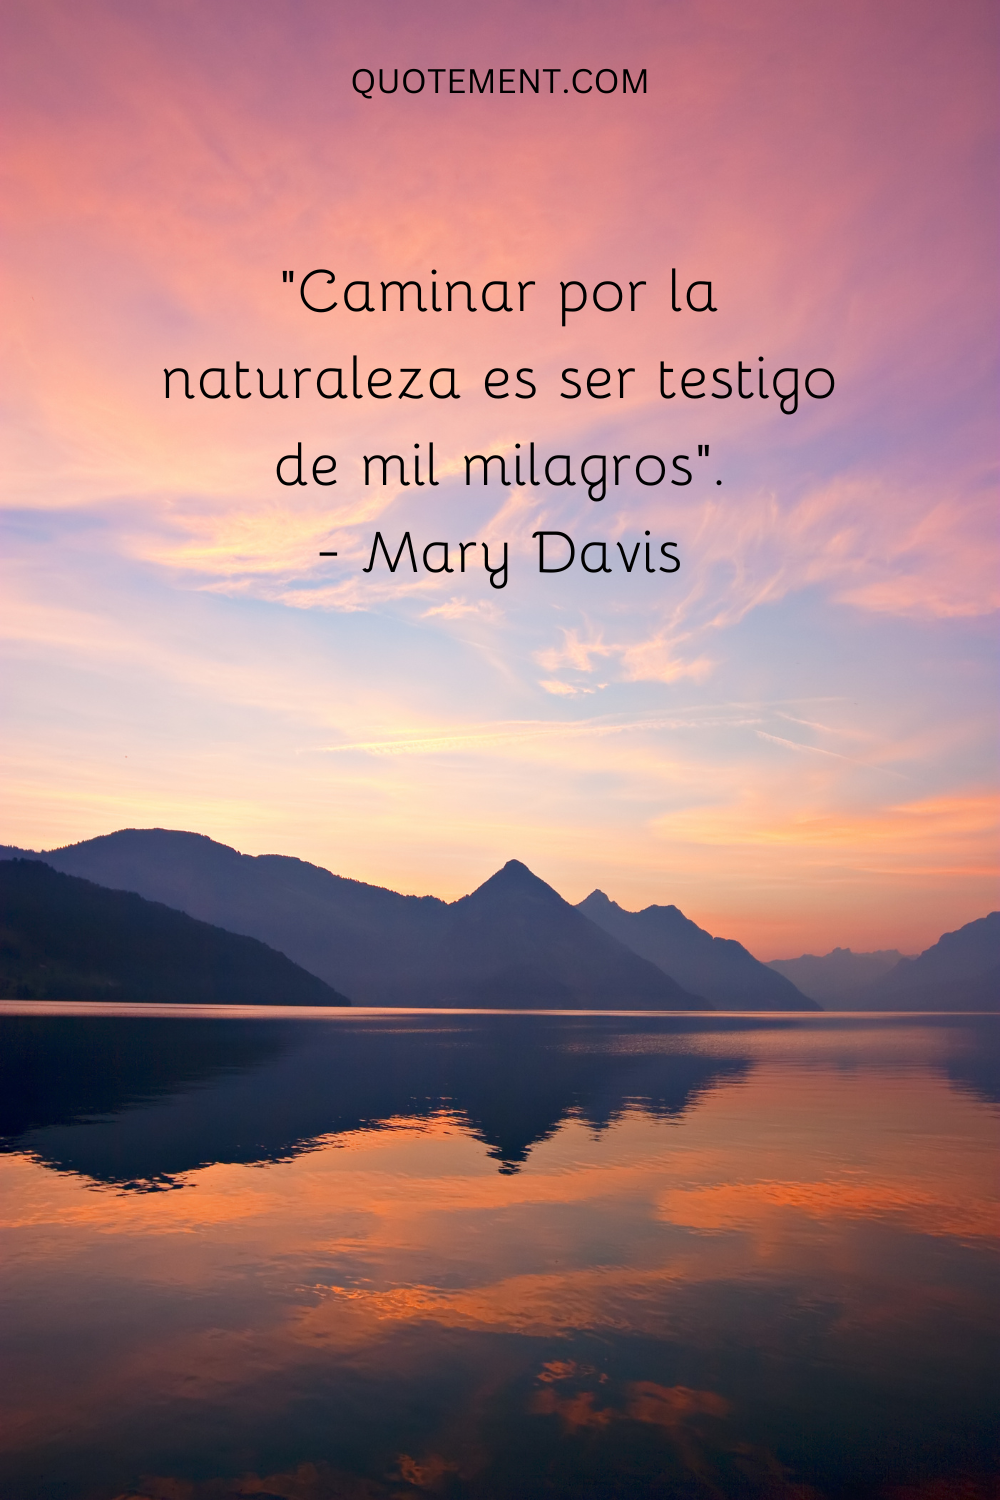 "Caminar por la naturaleza es ser testigo de mil milagros". - Mary Davis